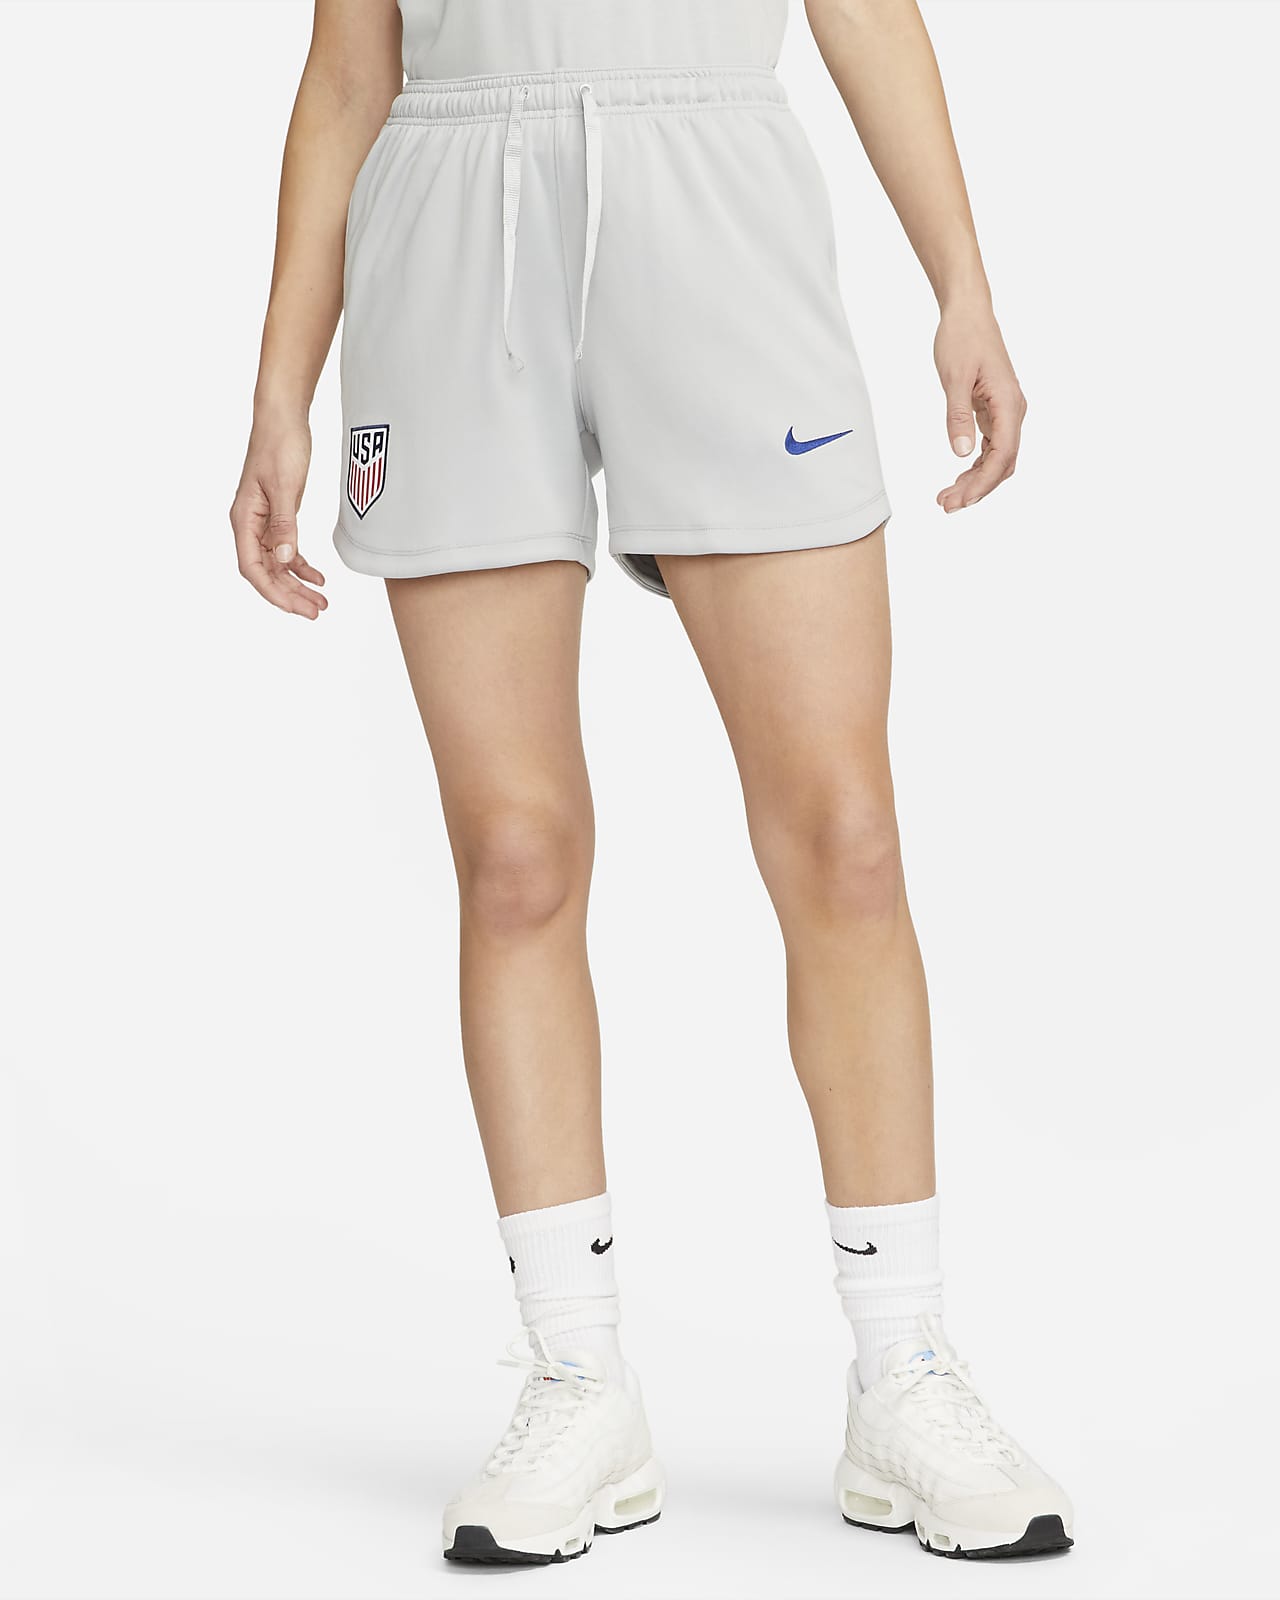 Shorts de fútbol Nike Dri-FIT Unidos.